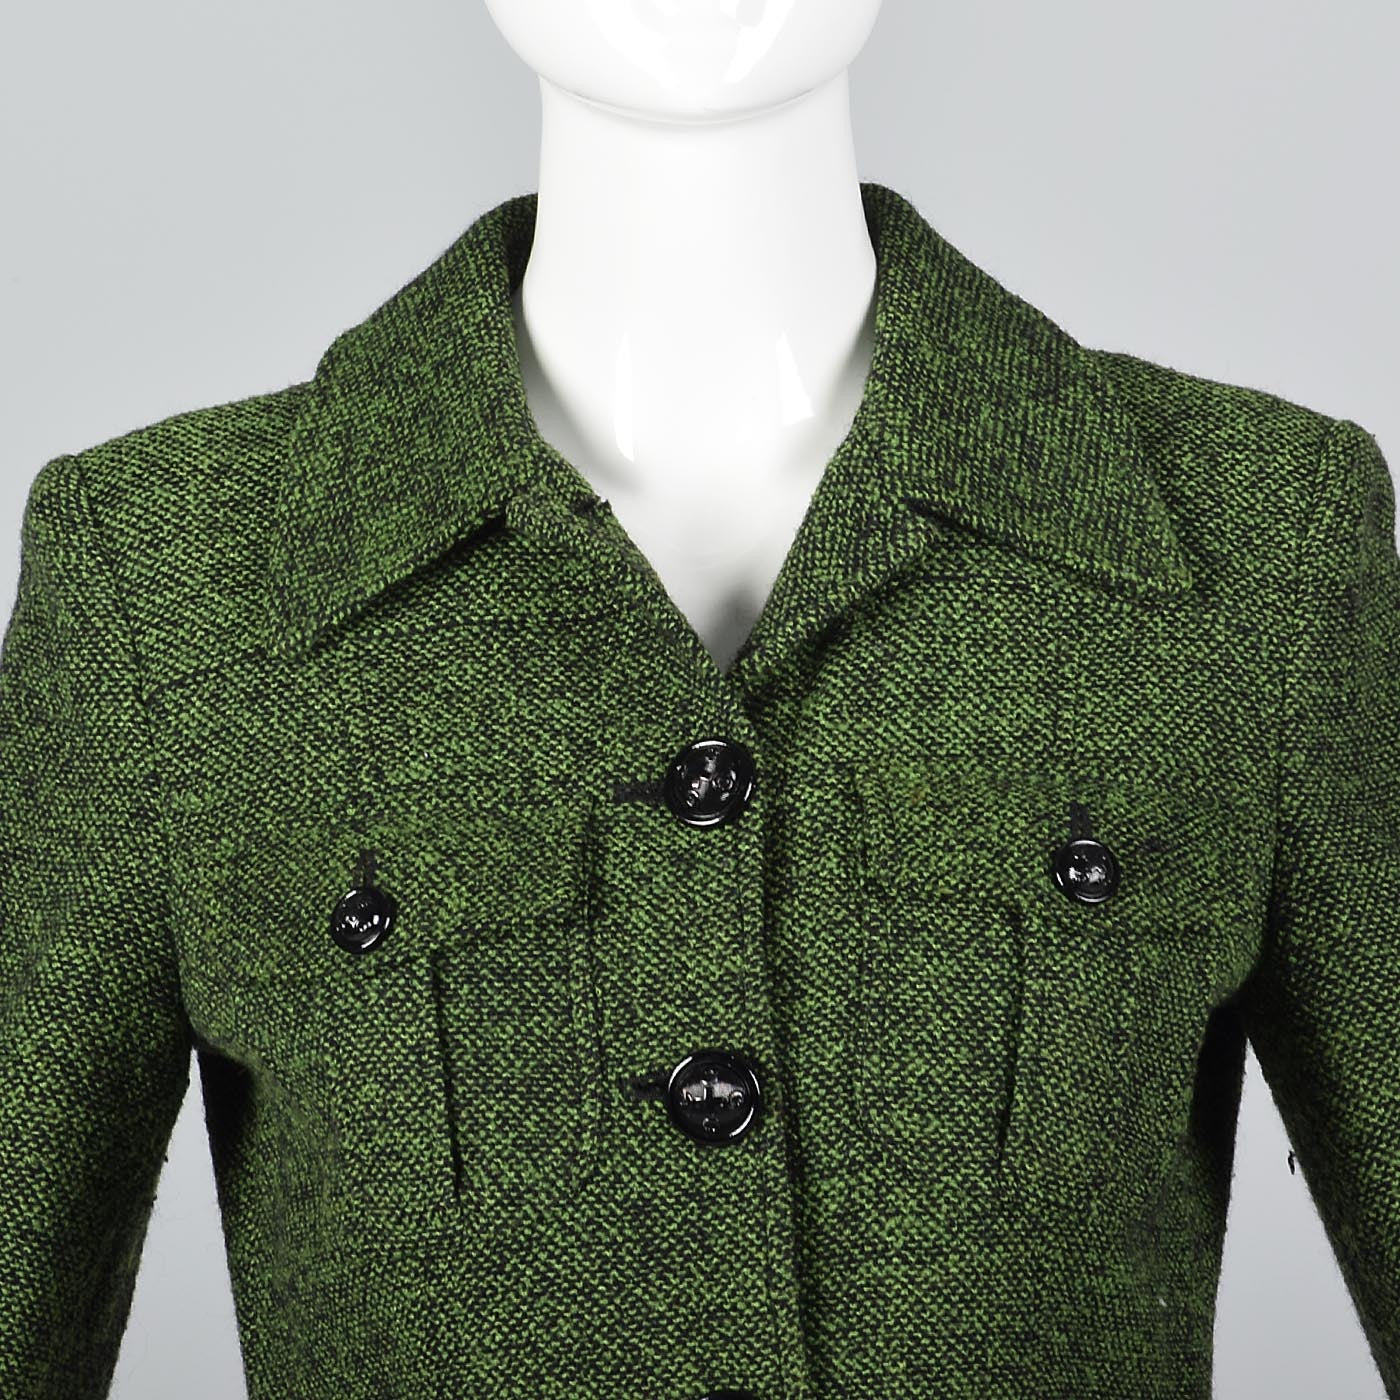 Moschino Cheap & Chic Green Tweed Skirt Suit